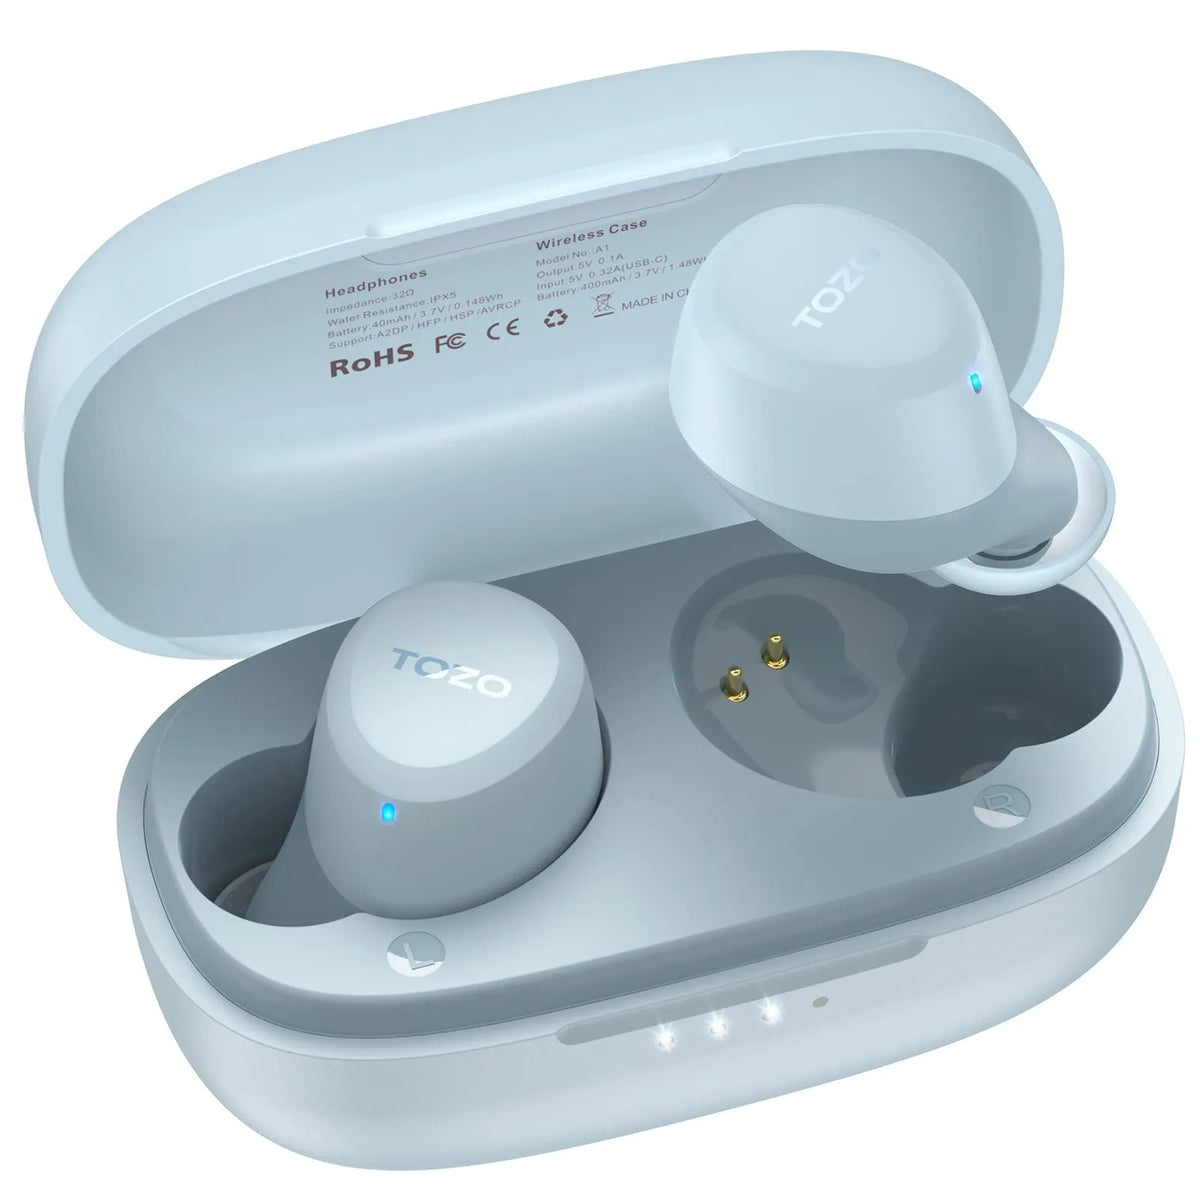 TOZO A1 Mini Wireless Earbuds-Blue